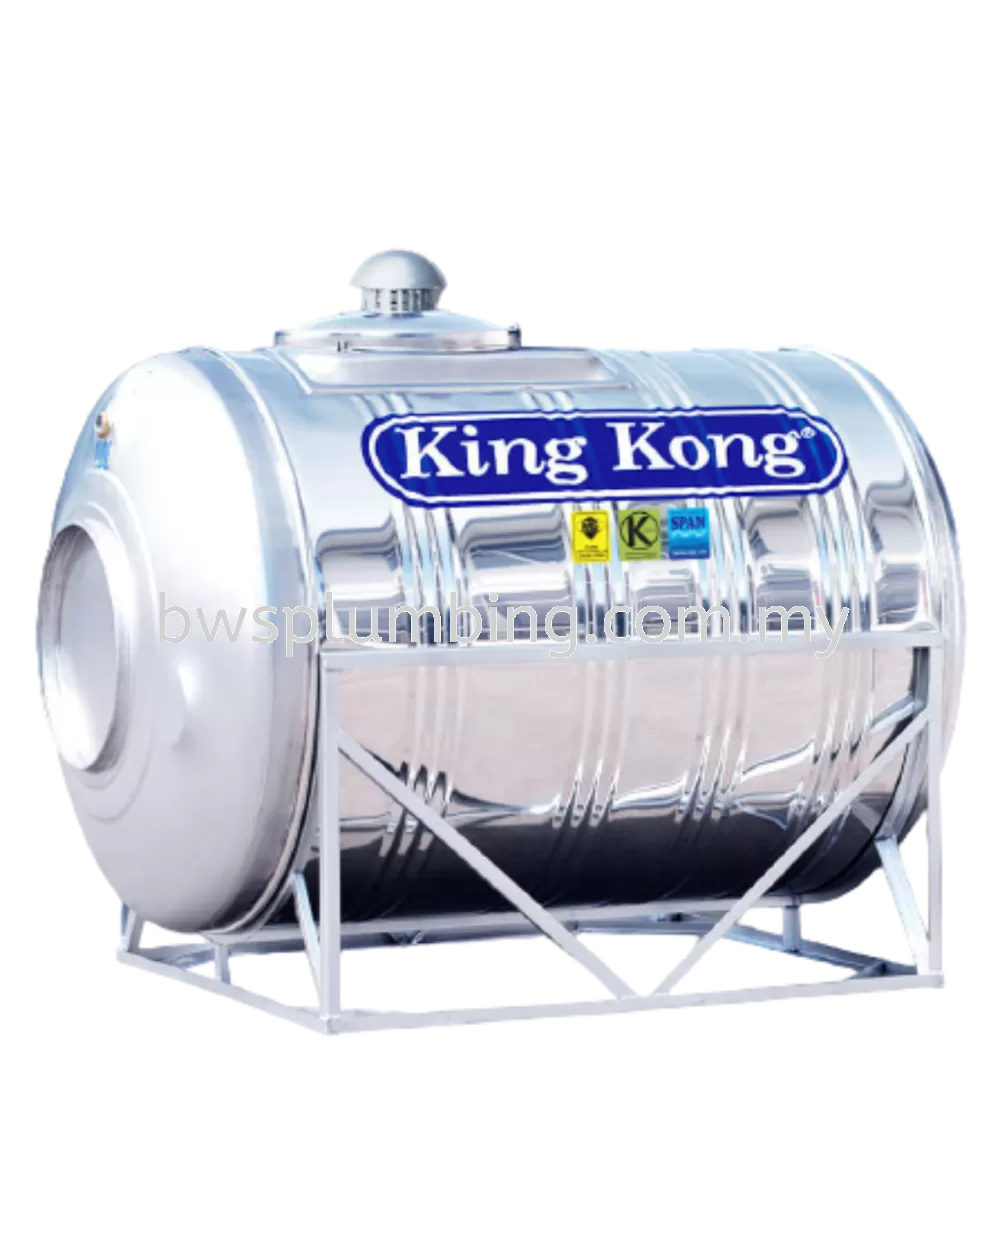 King Kong ZR085 (850 liters) Stainless Steel Water Tank (Horizontal Model)